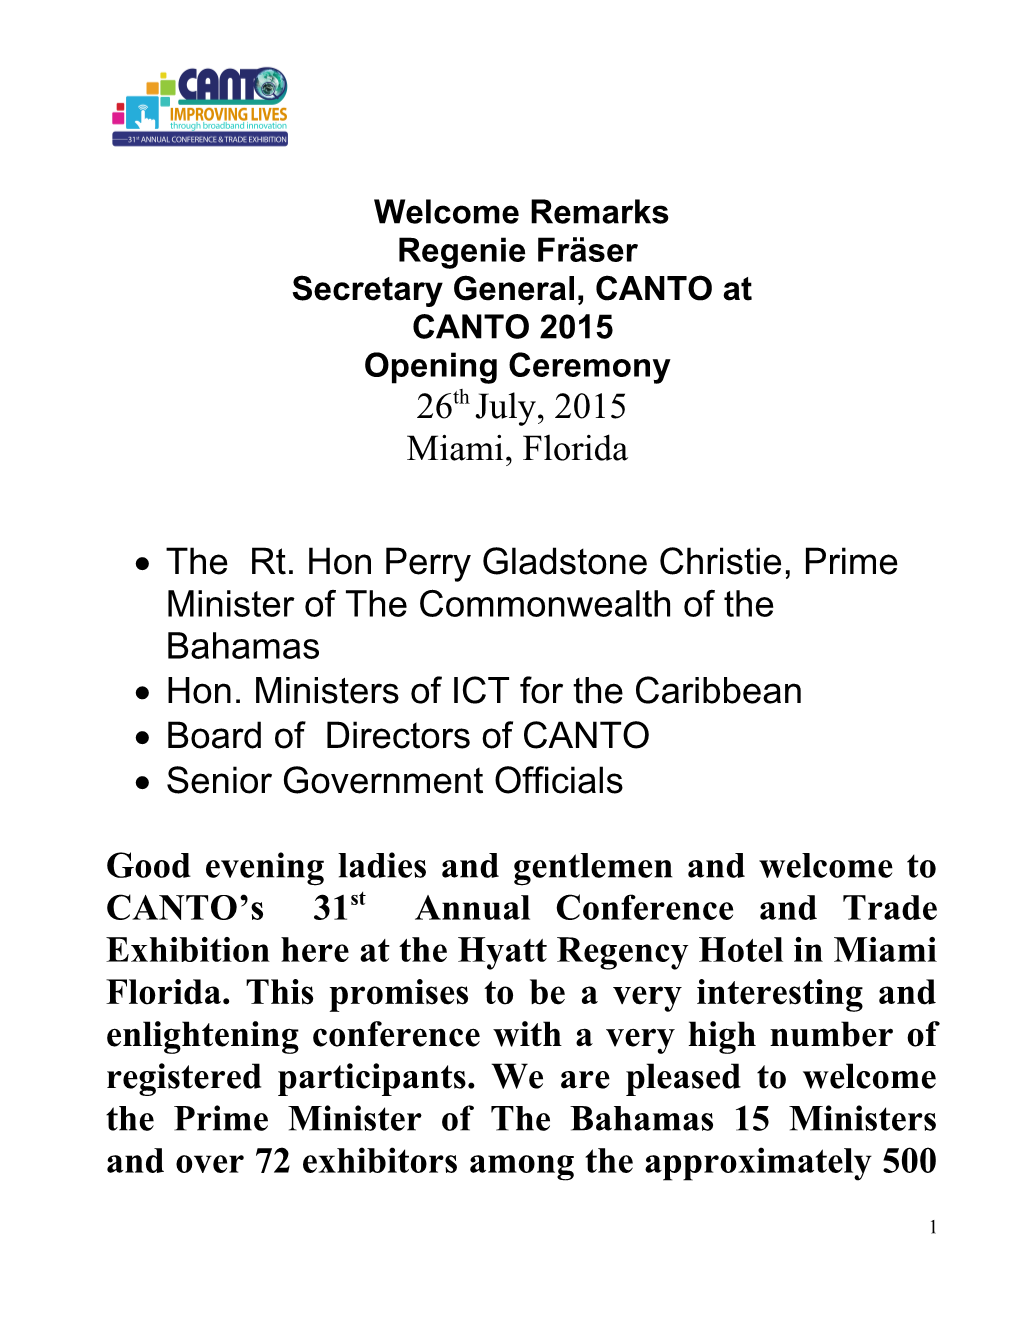 Secretary General, CANTO At